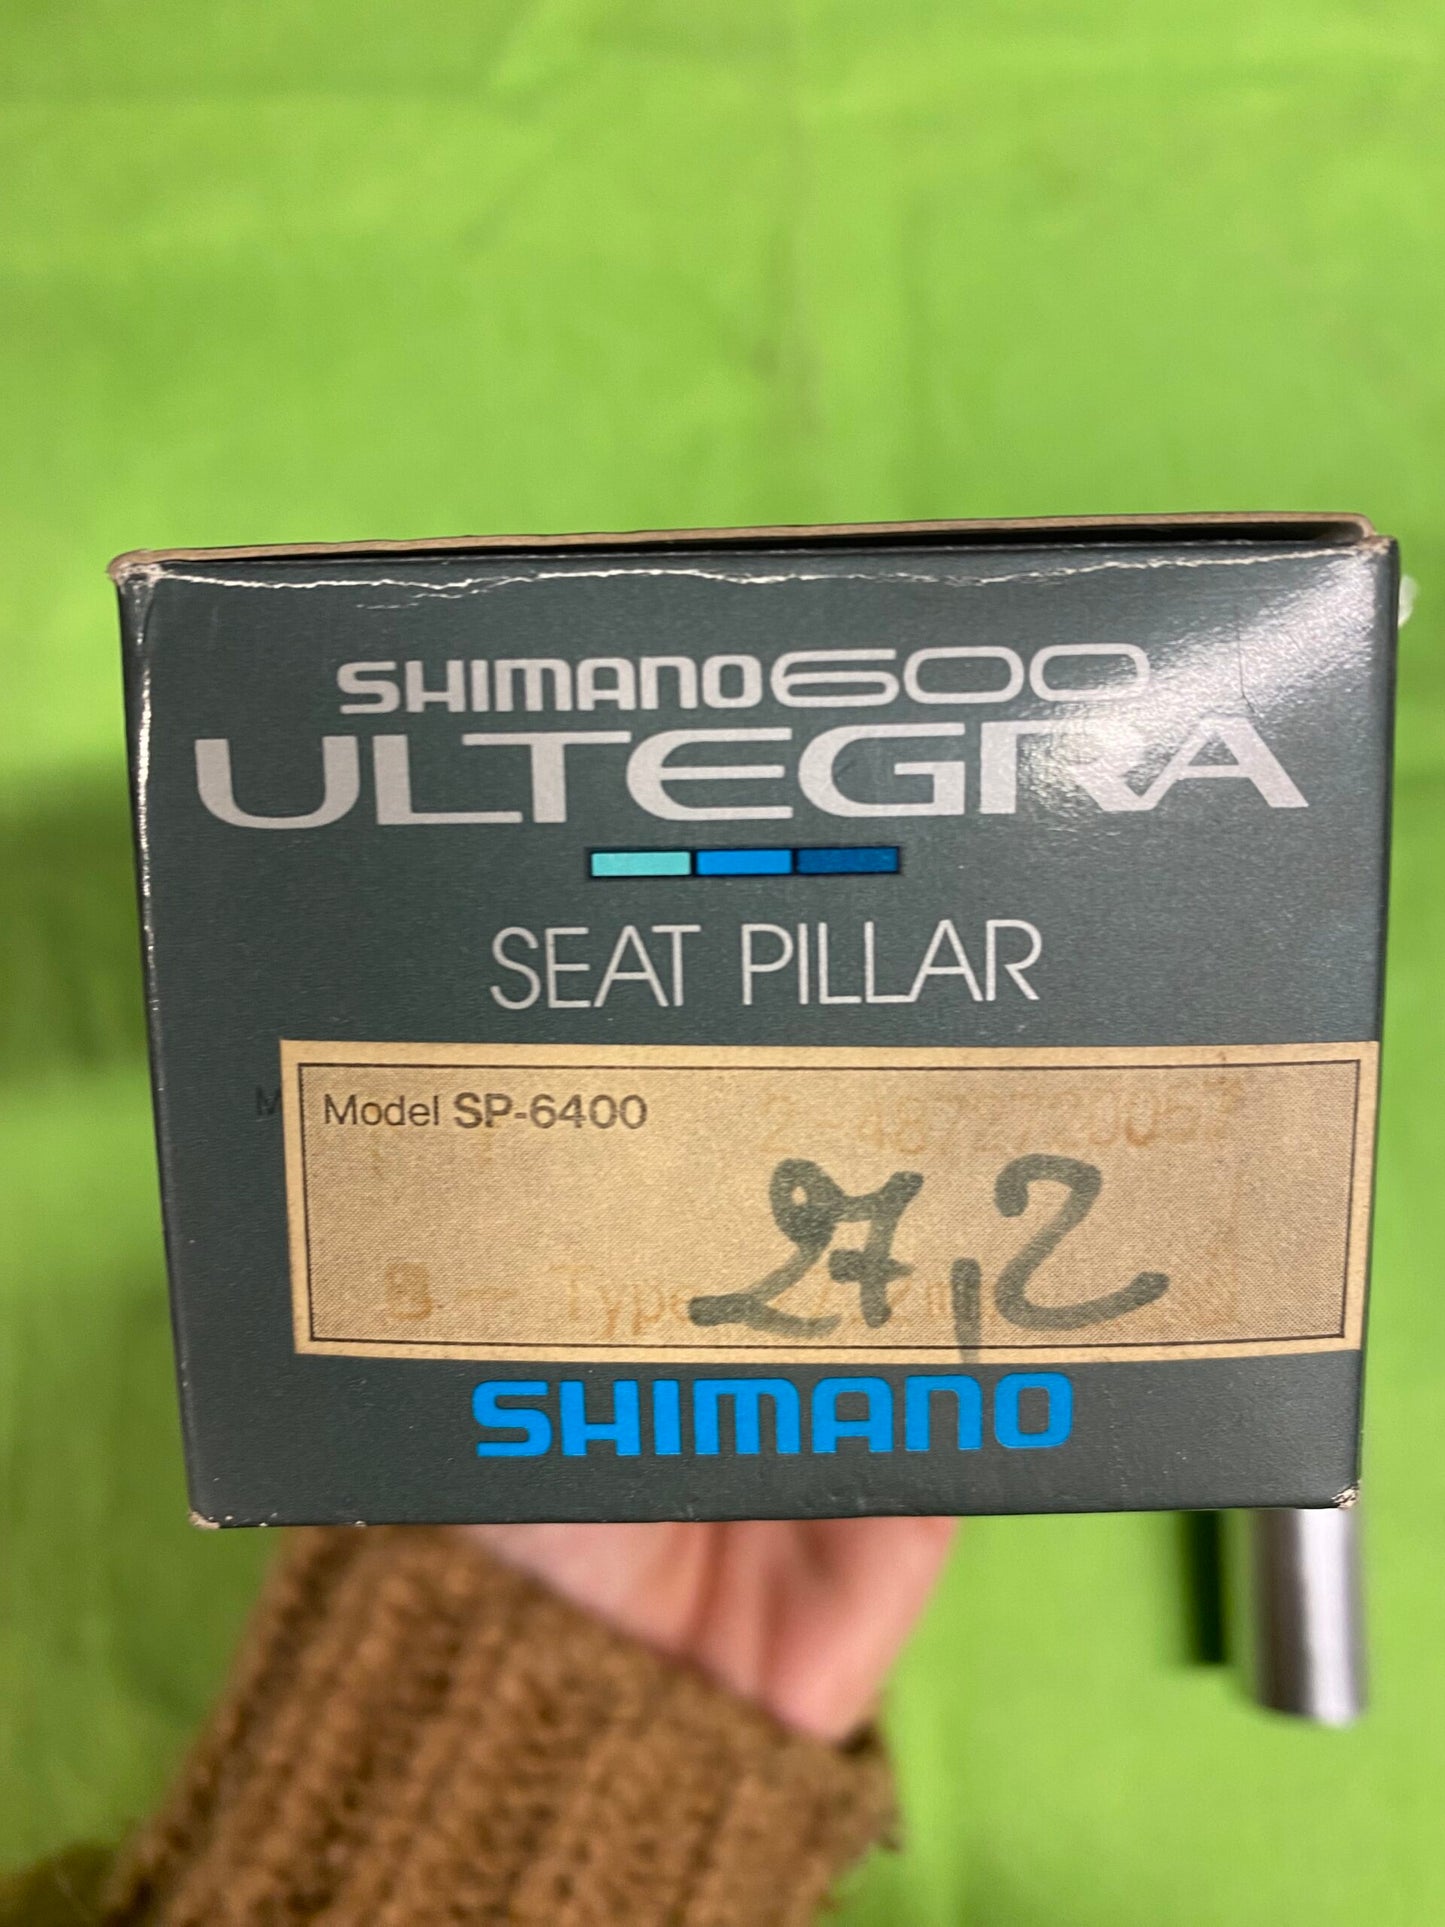 REGGISELLA SHIMANO ULTEGRA SP-6400